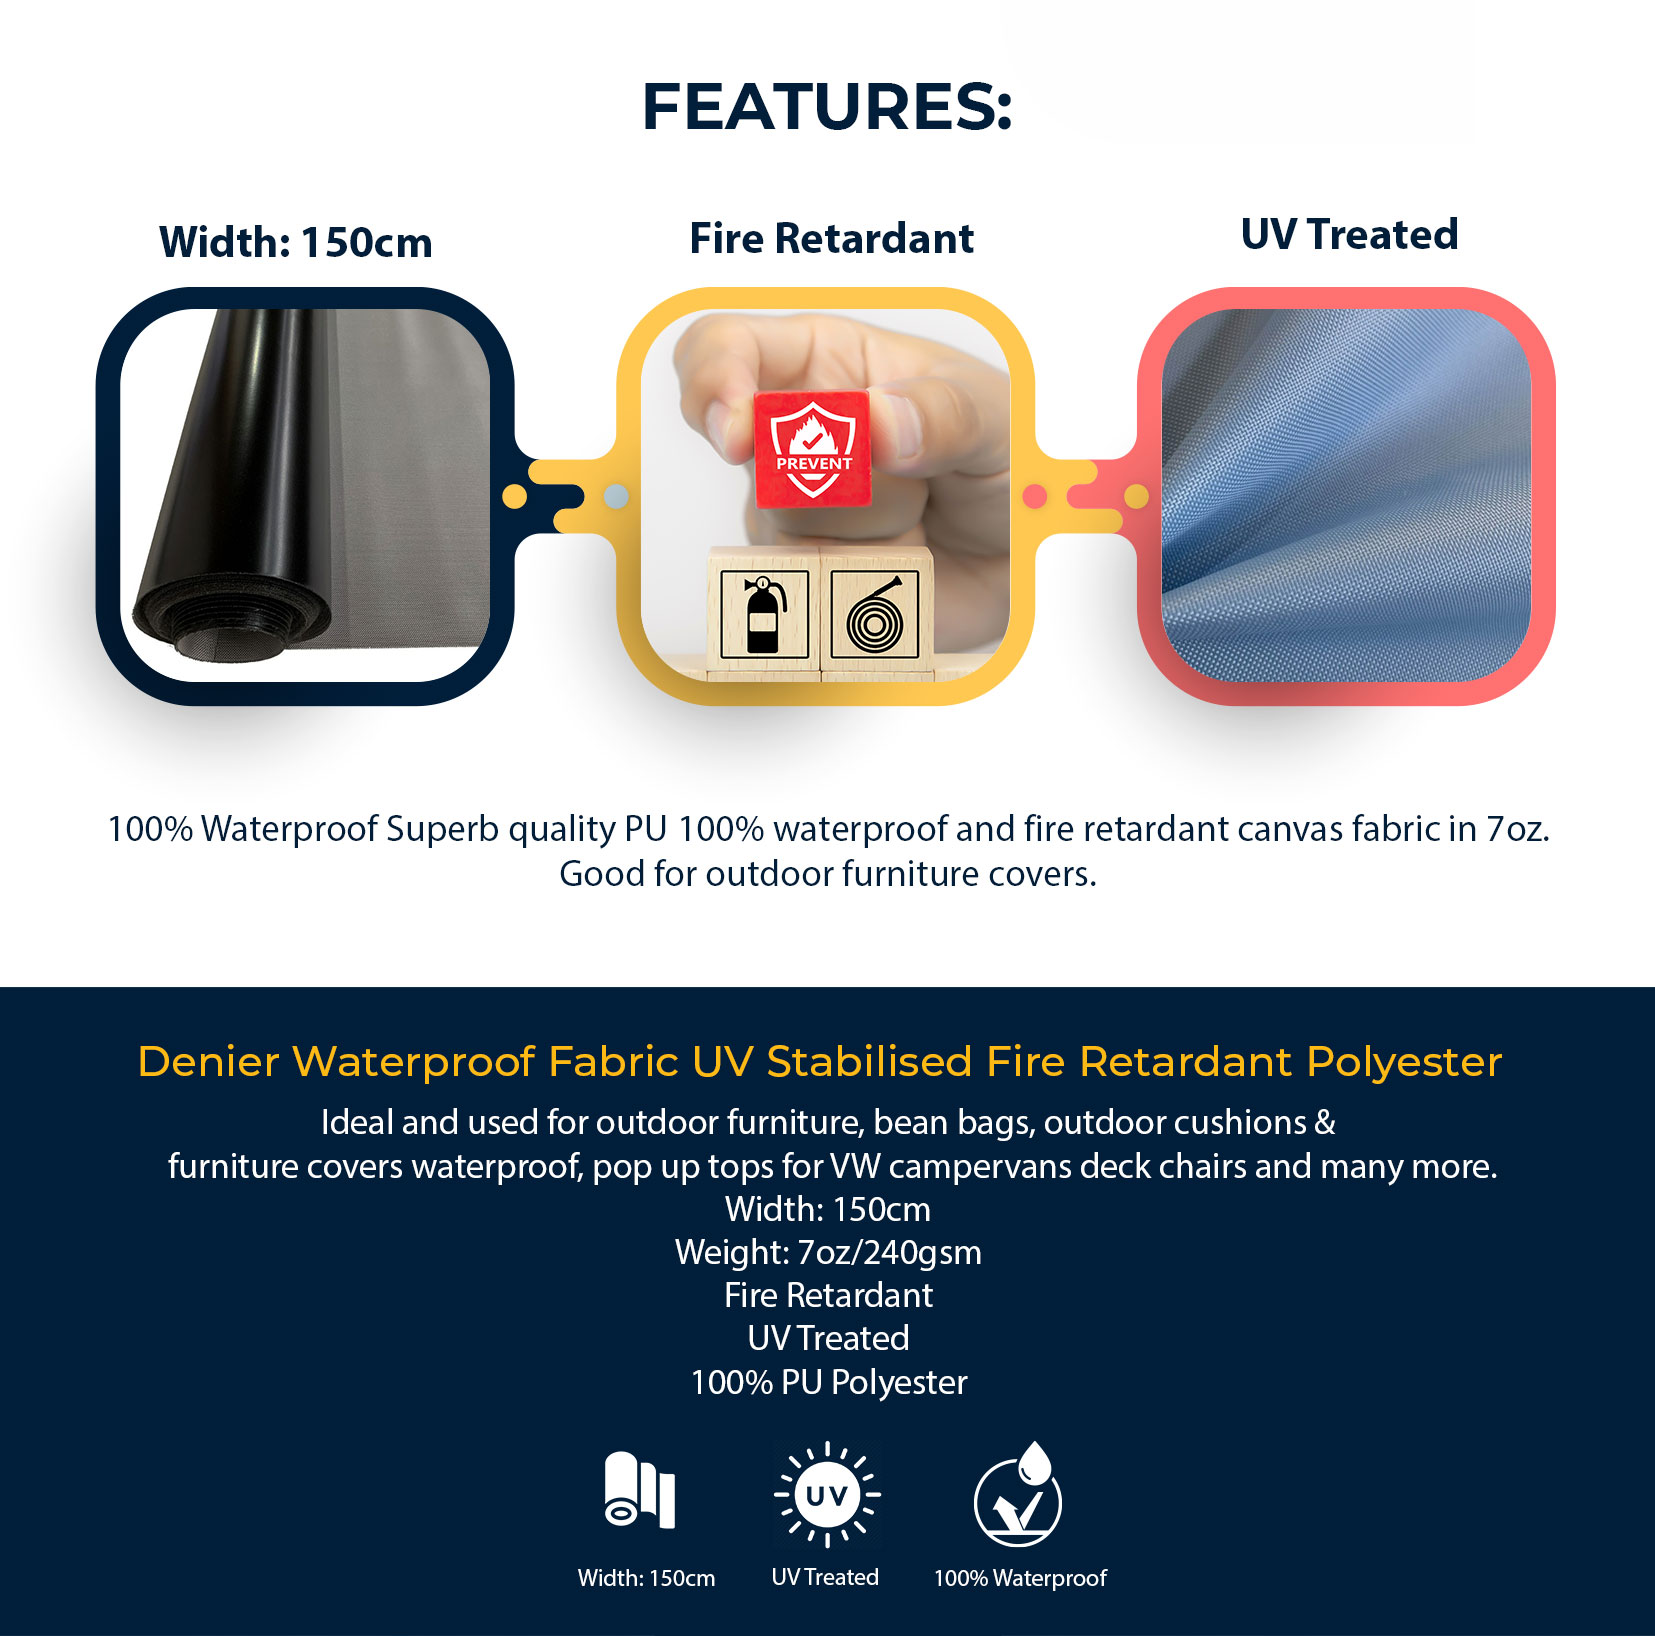 7oz 500 Denier Waterproof Fabric UV Stabilised Fire Retardant Polyester Feature